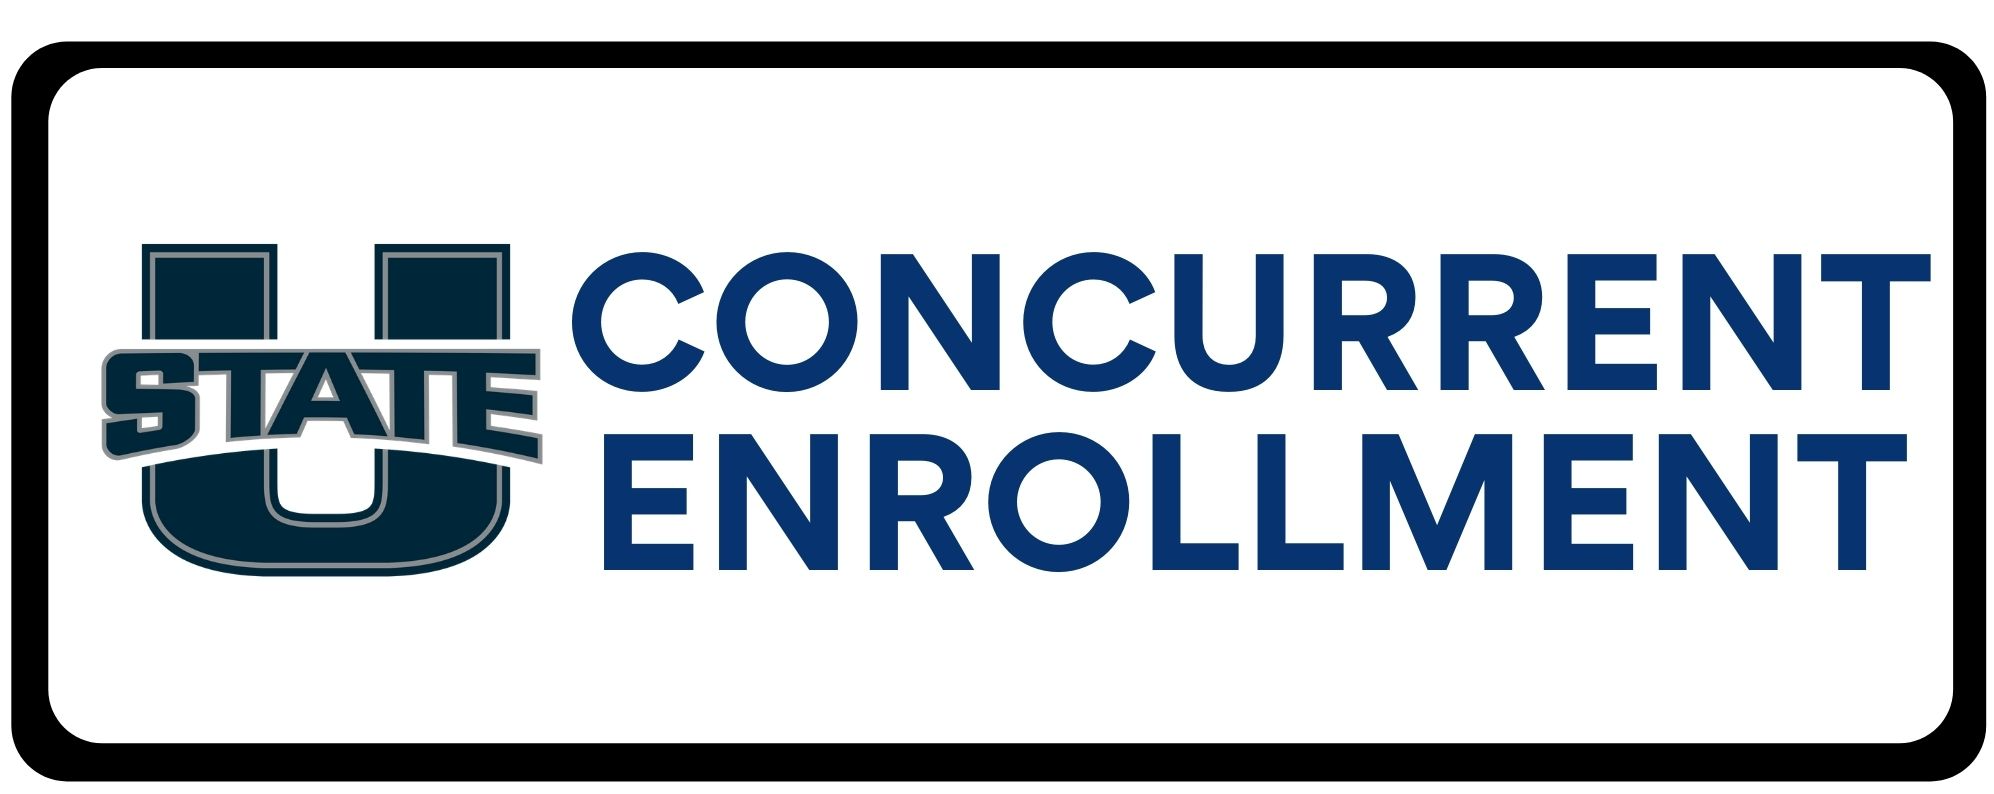 Concurrent enrollment